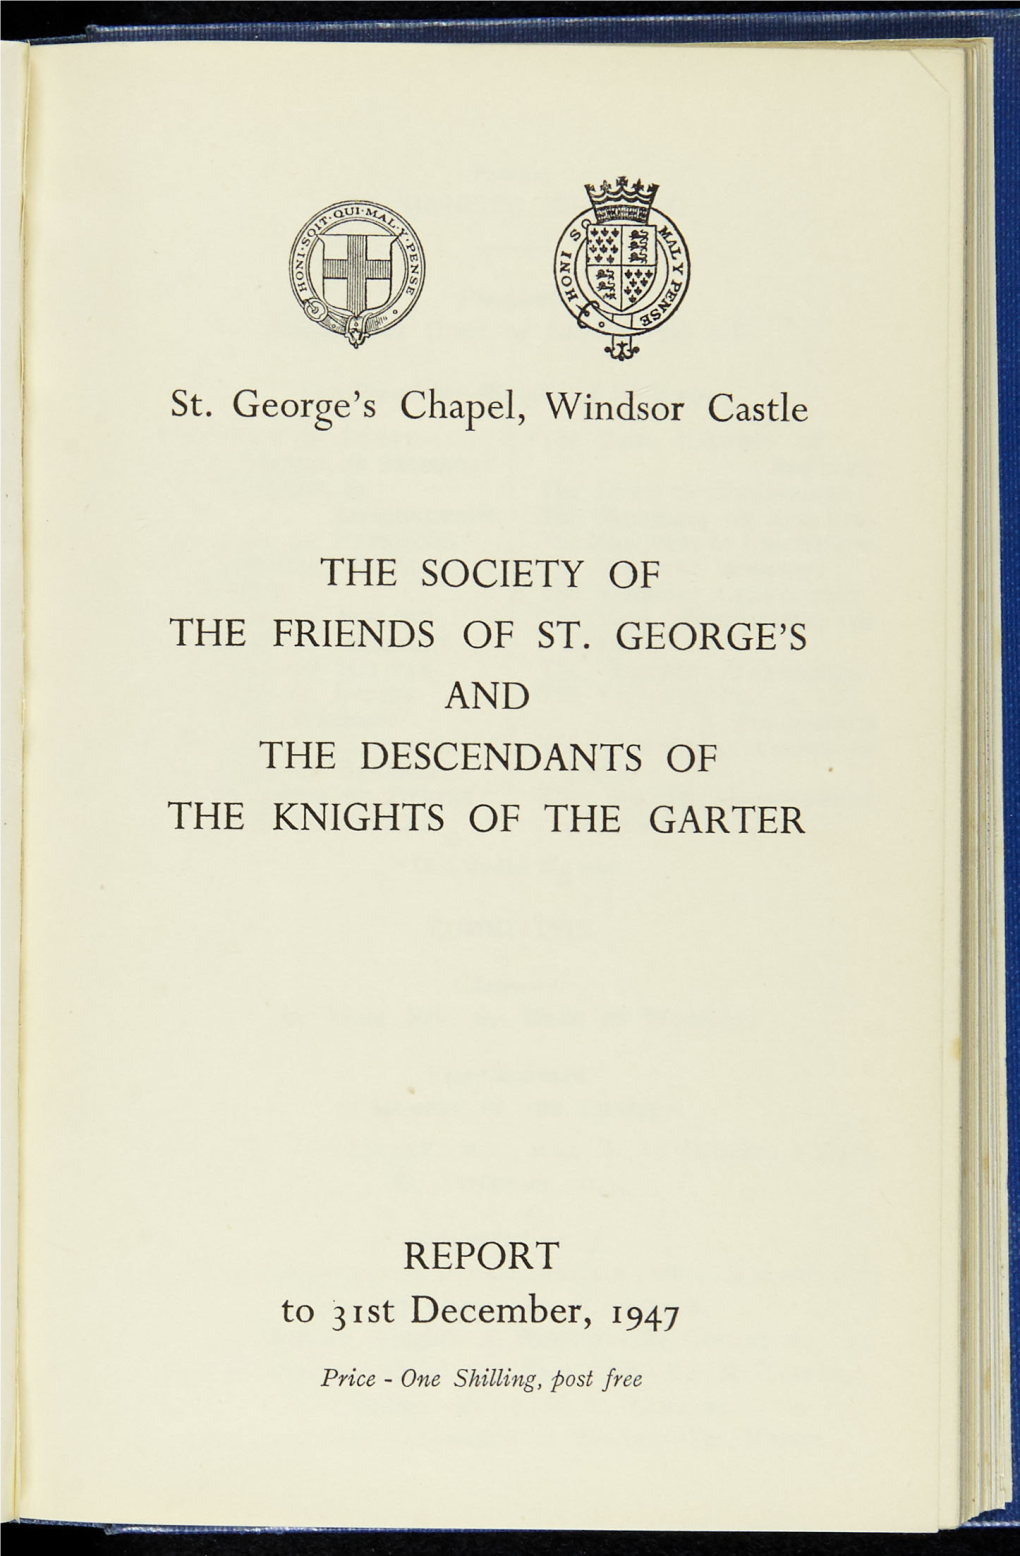 1947 Annual Report